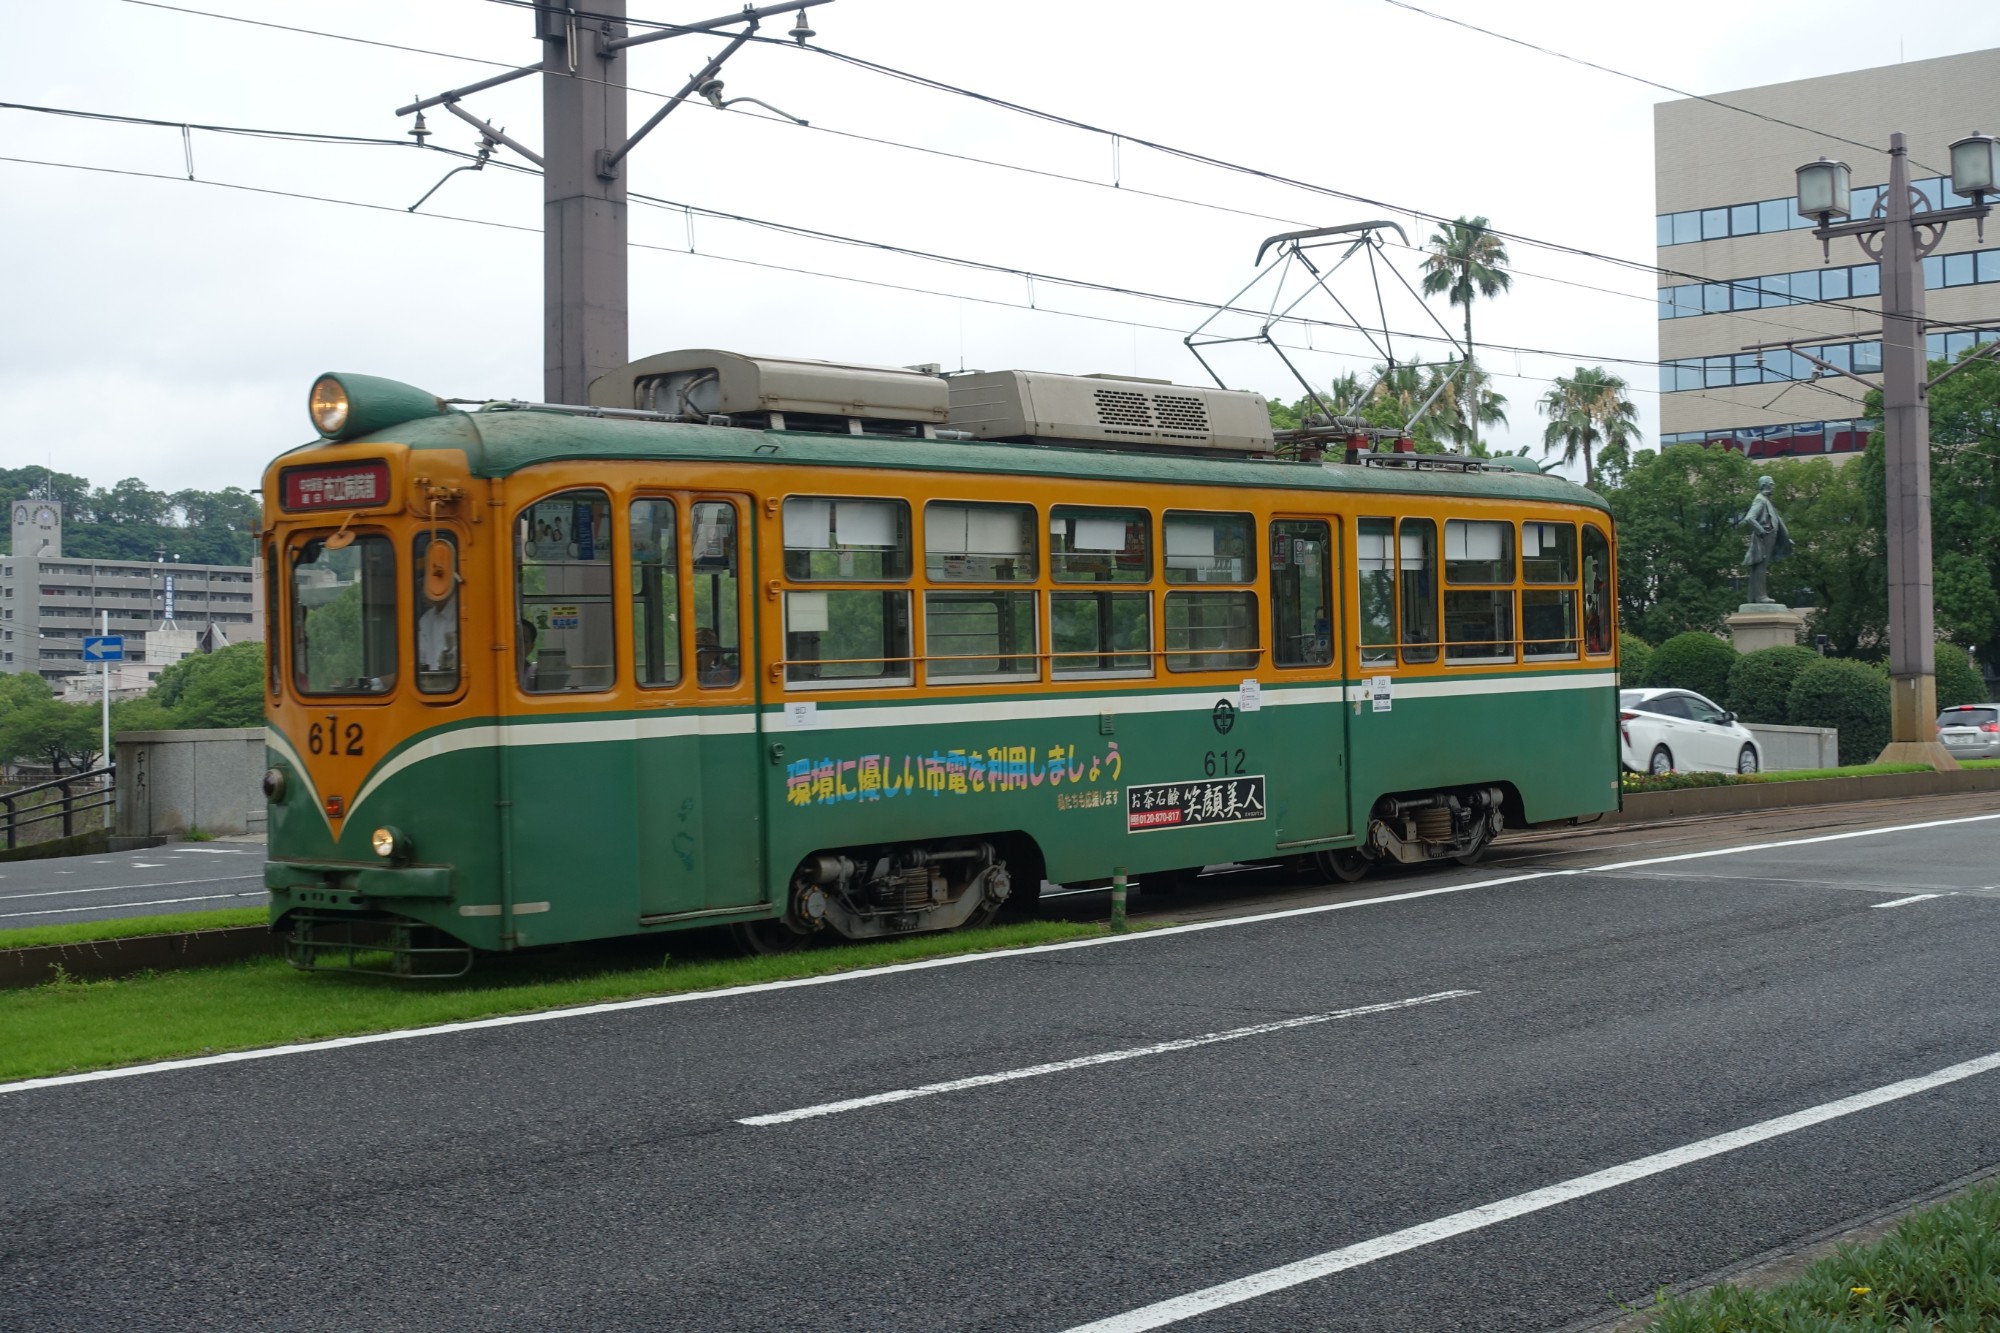 A Kagoshima tram to nowhere